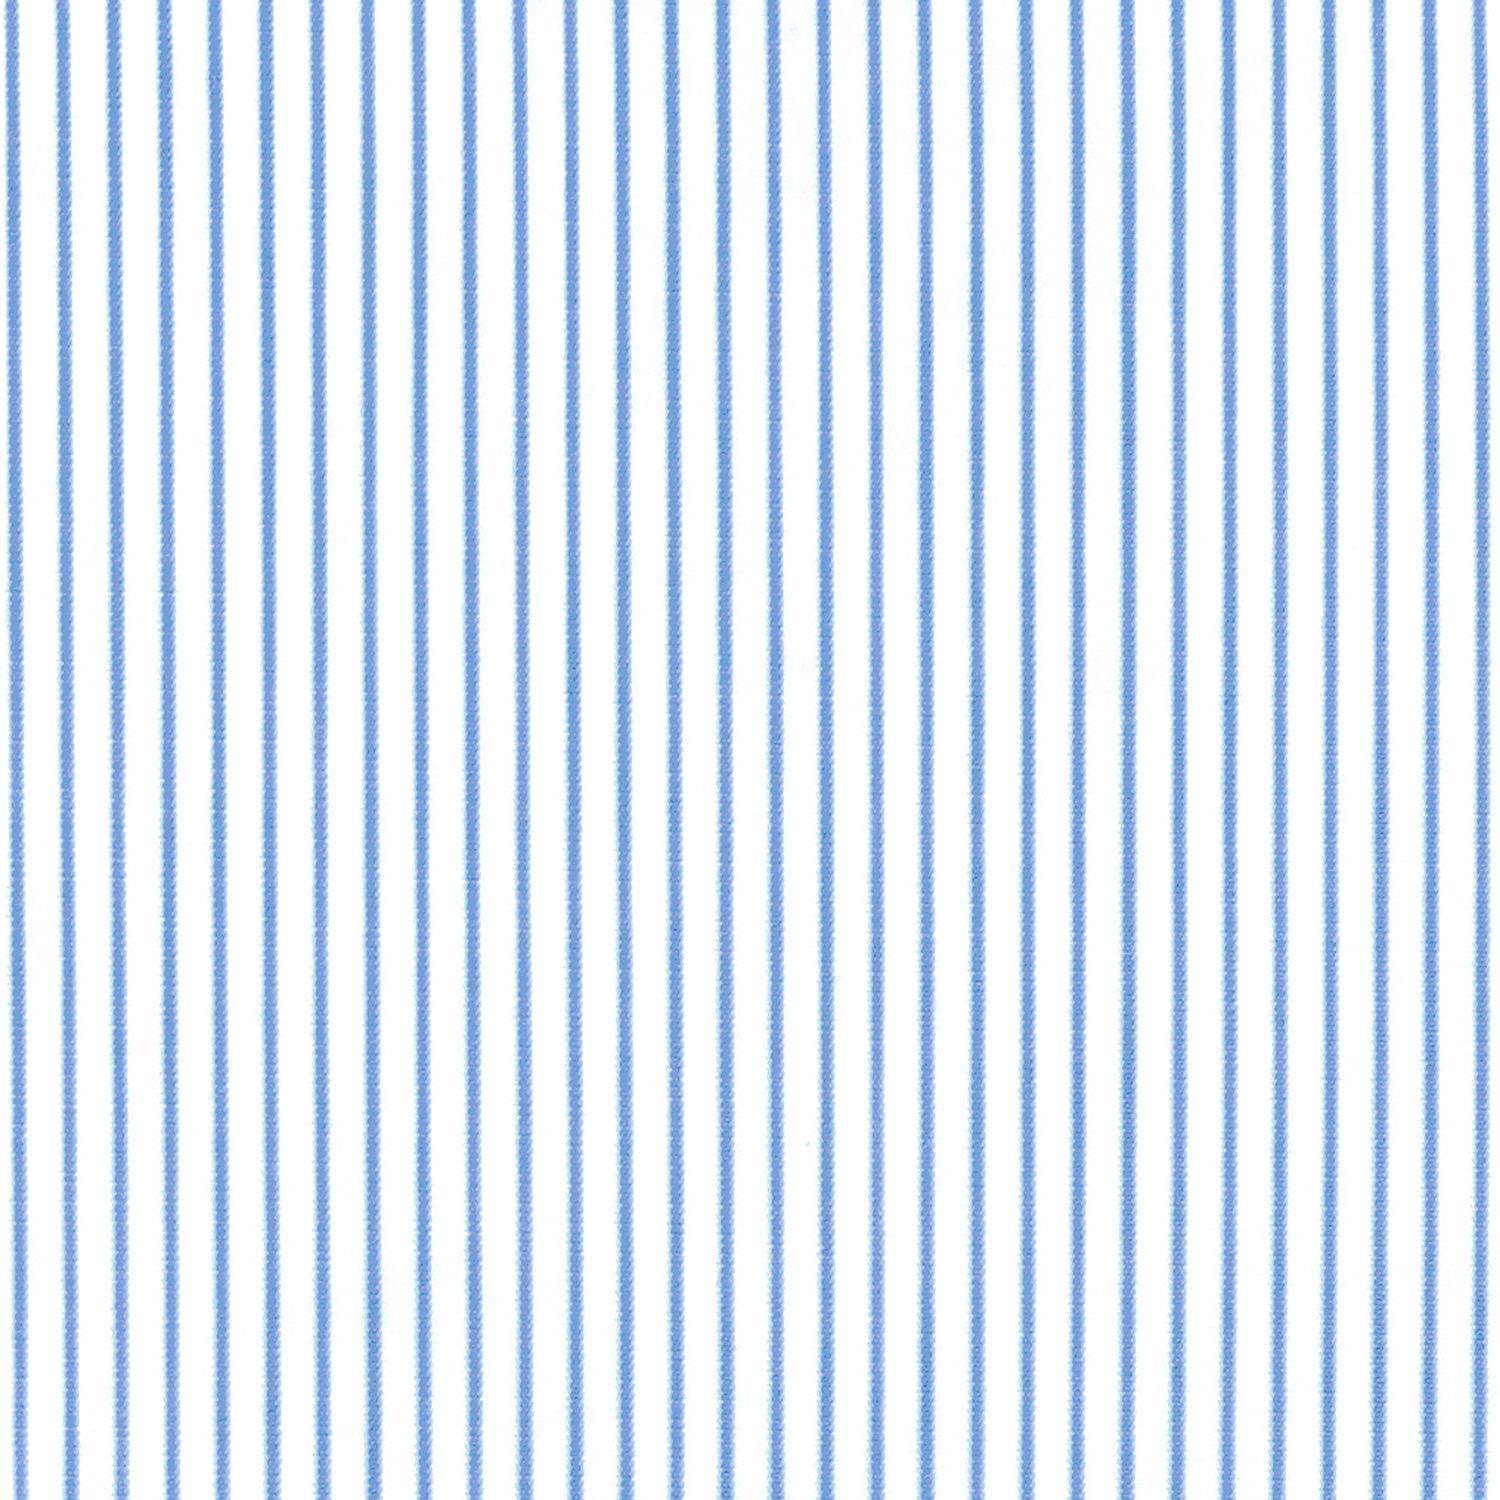 Striped White and Blue Background Logo - White background with blue stripes – JJMARTON